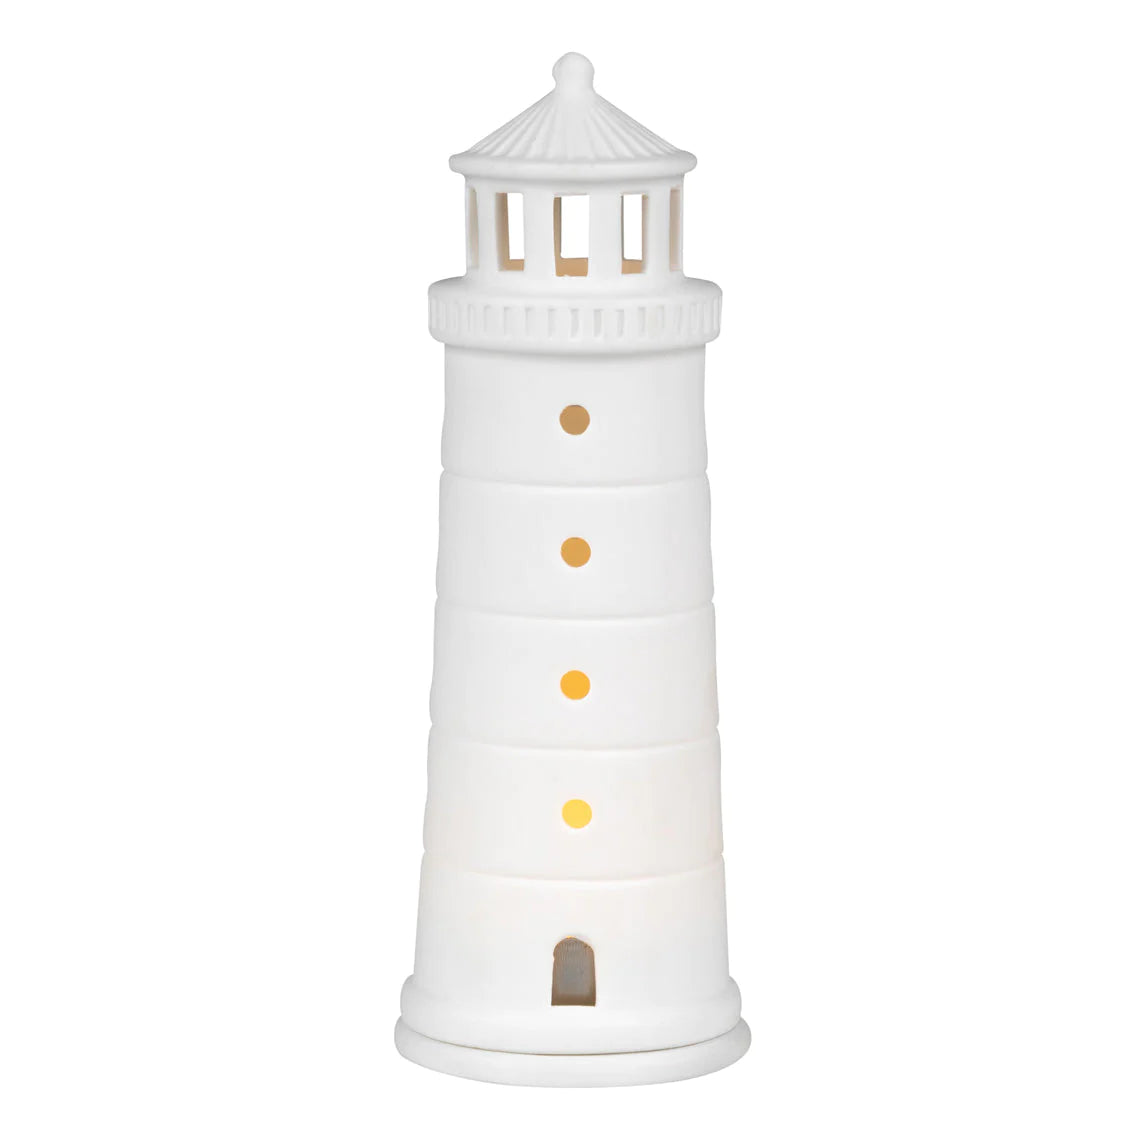 Beyond The Sea Lighthouse Tealight Holder -  Small - 6.3"